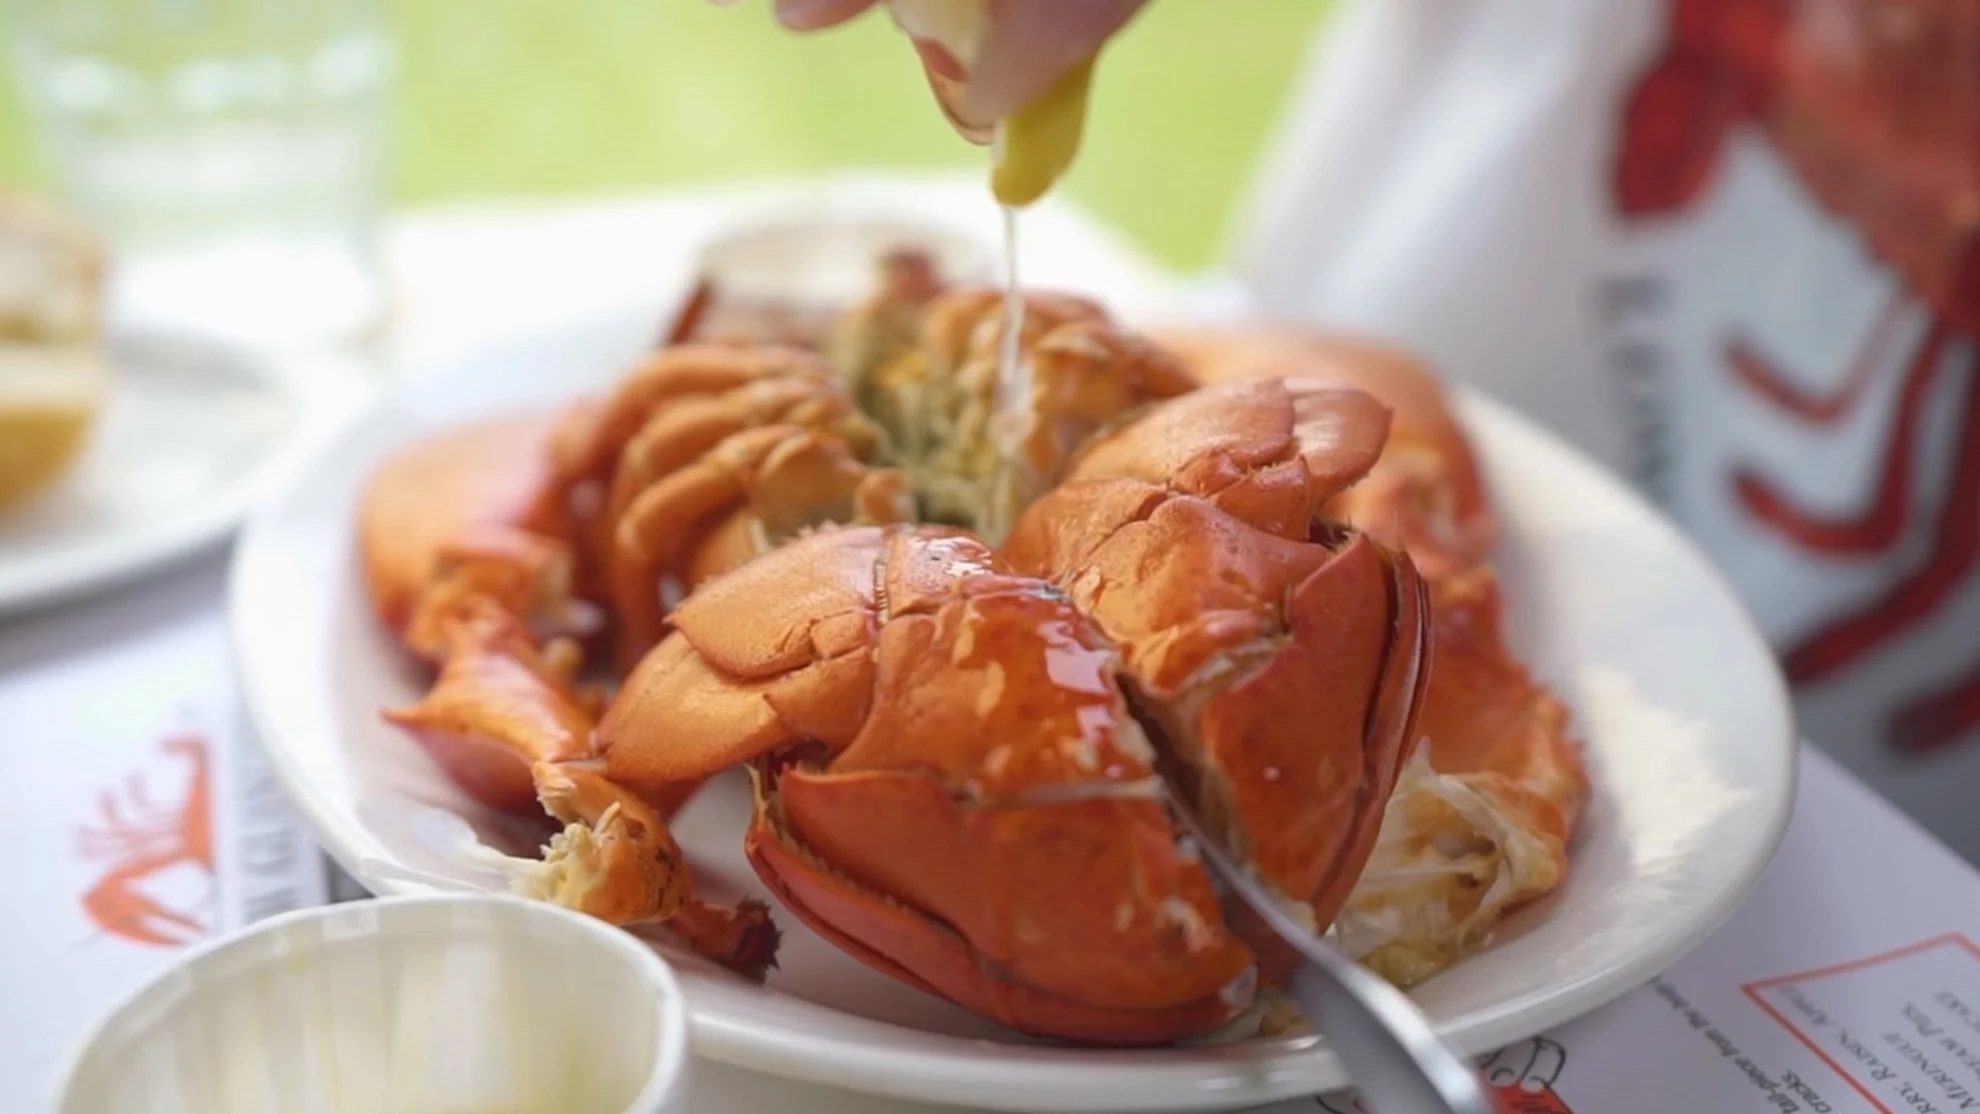 UGC - PEI lobster roll